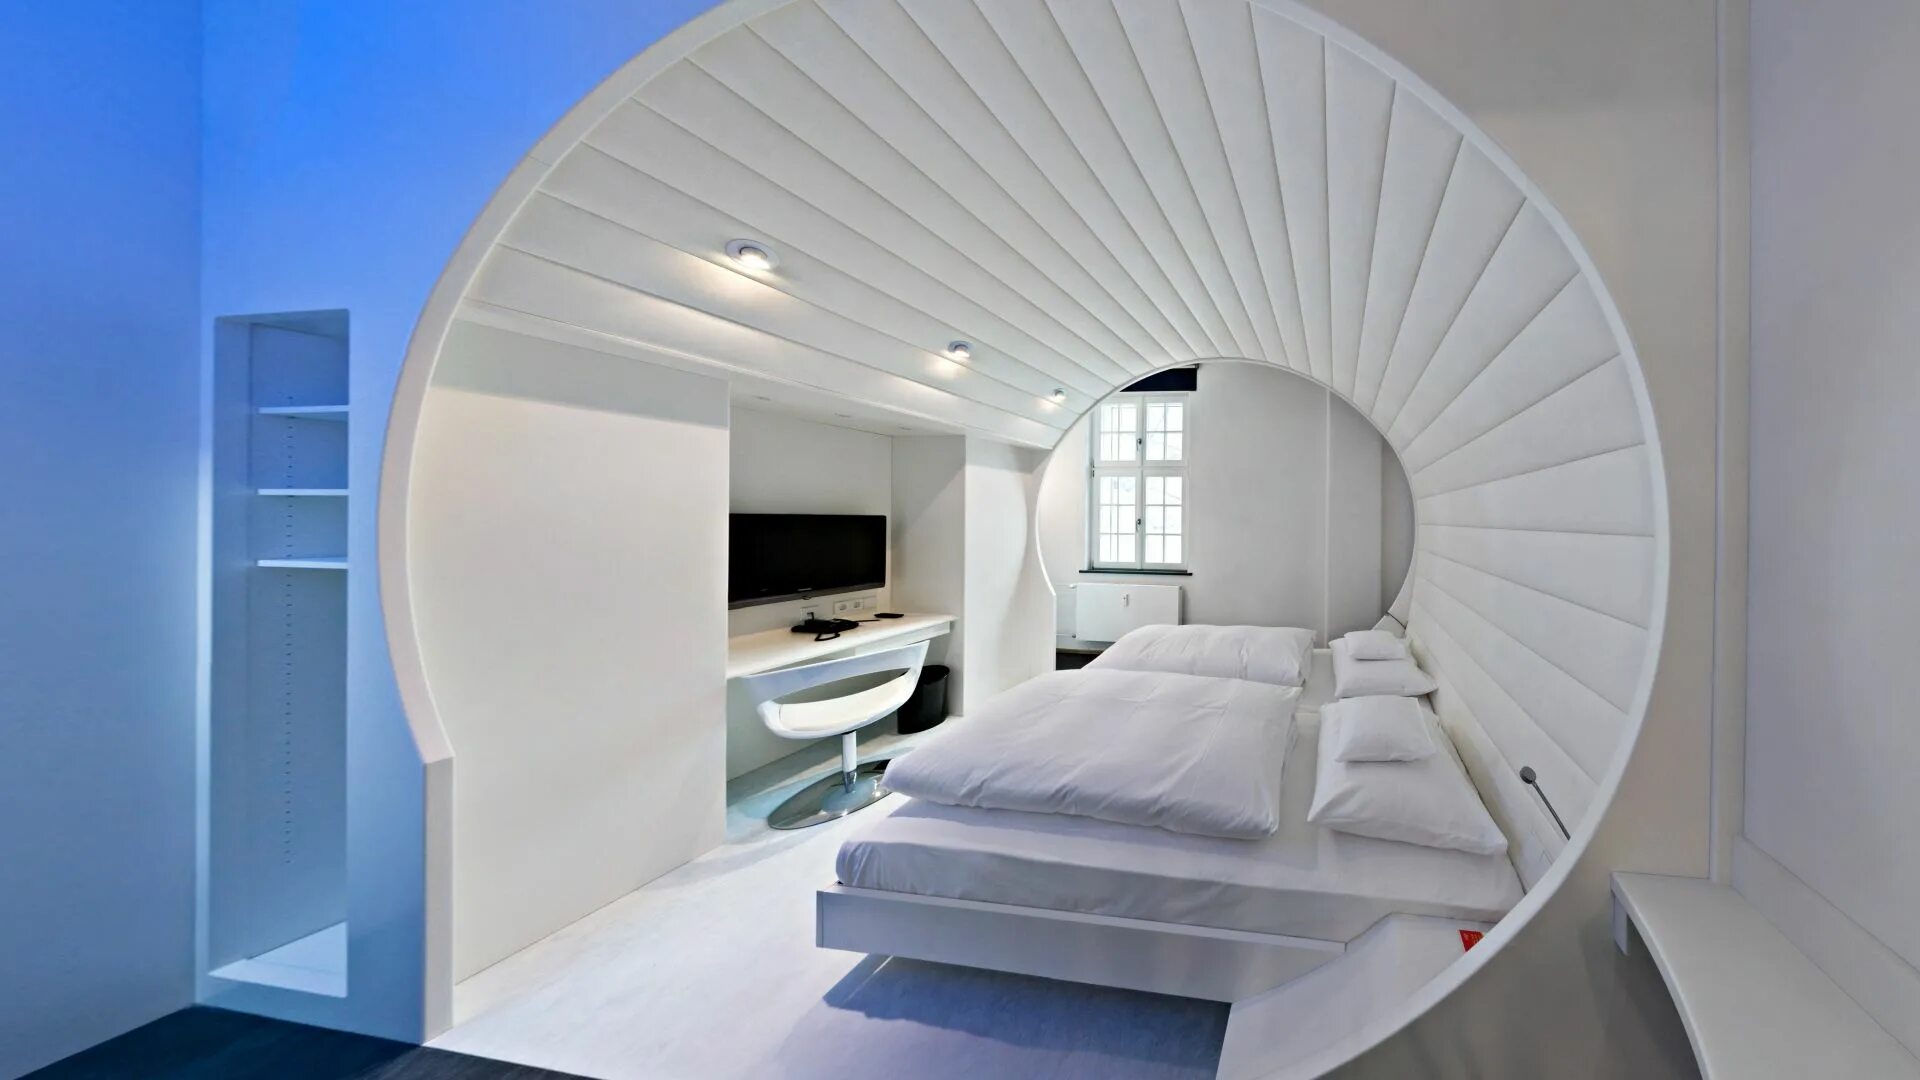 Нестандартные кровати. Необычные кровати. Необычный интерьер. Необычные спальни. Необычные дизайнерские кровати.